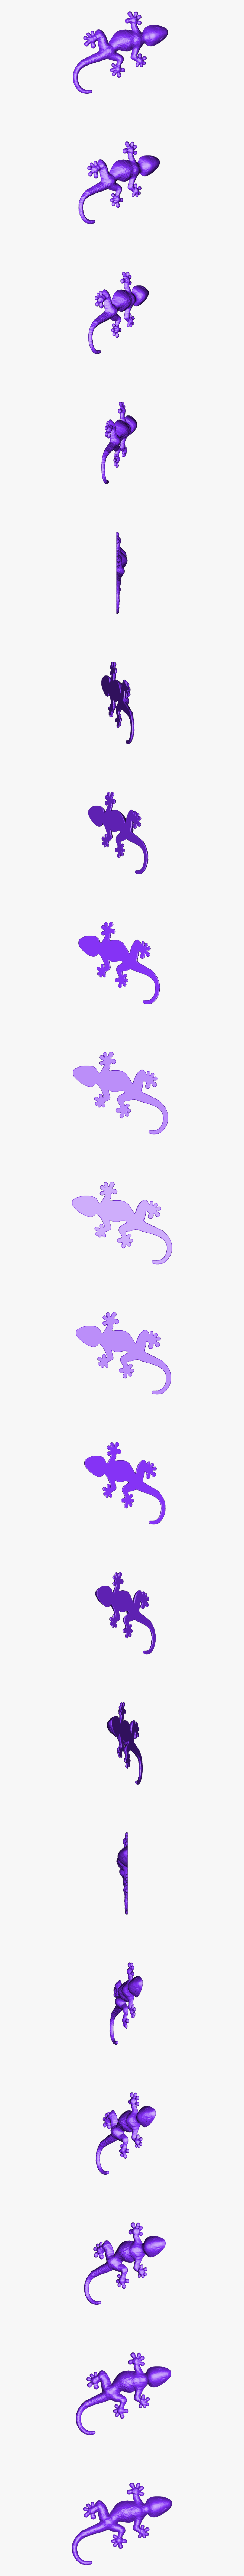 Gecko Clip Art, Transparent Clipart